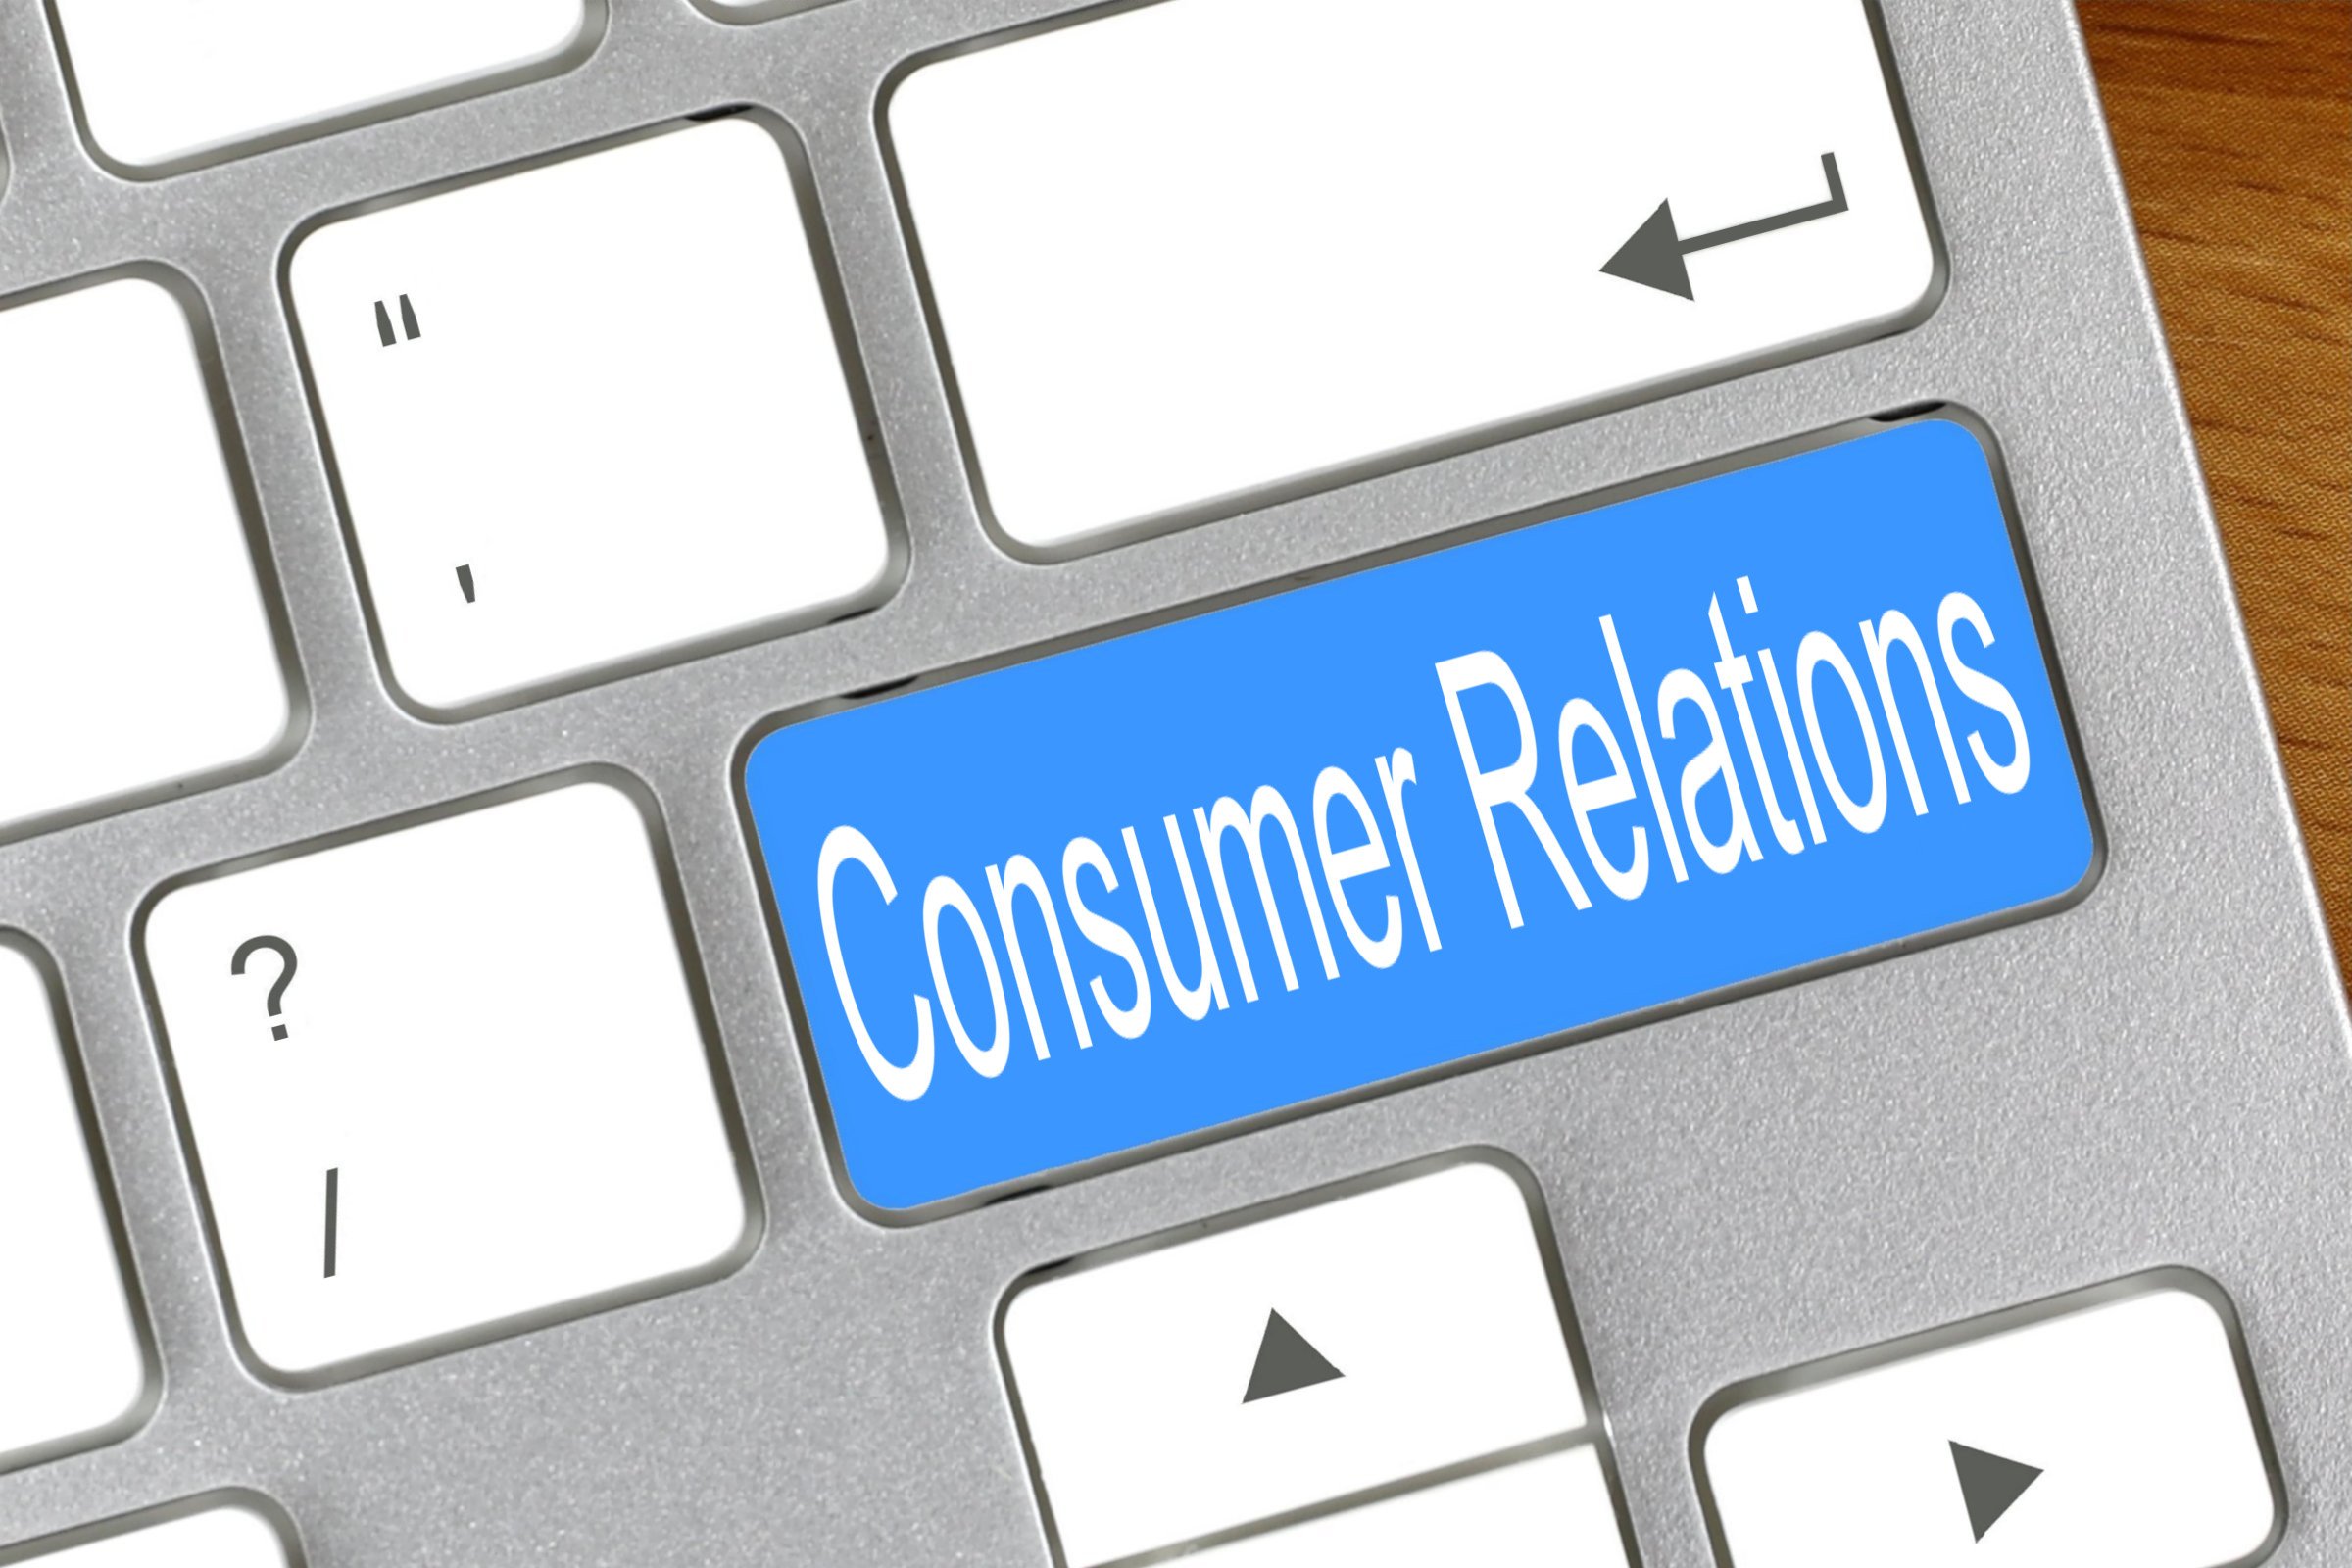 consumer relations